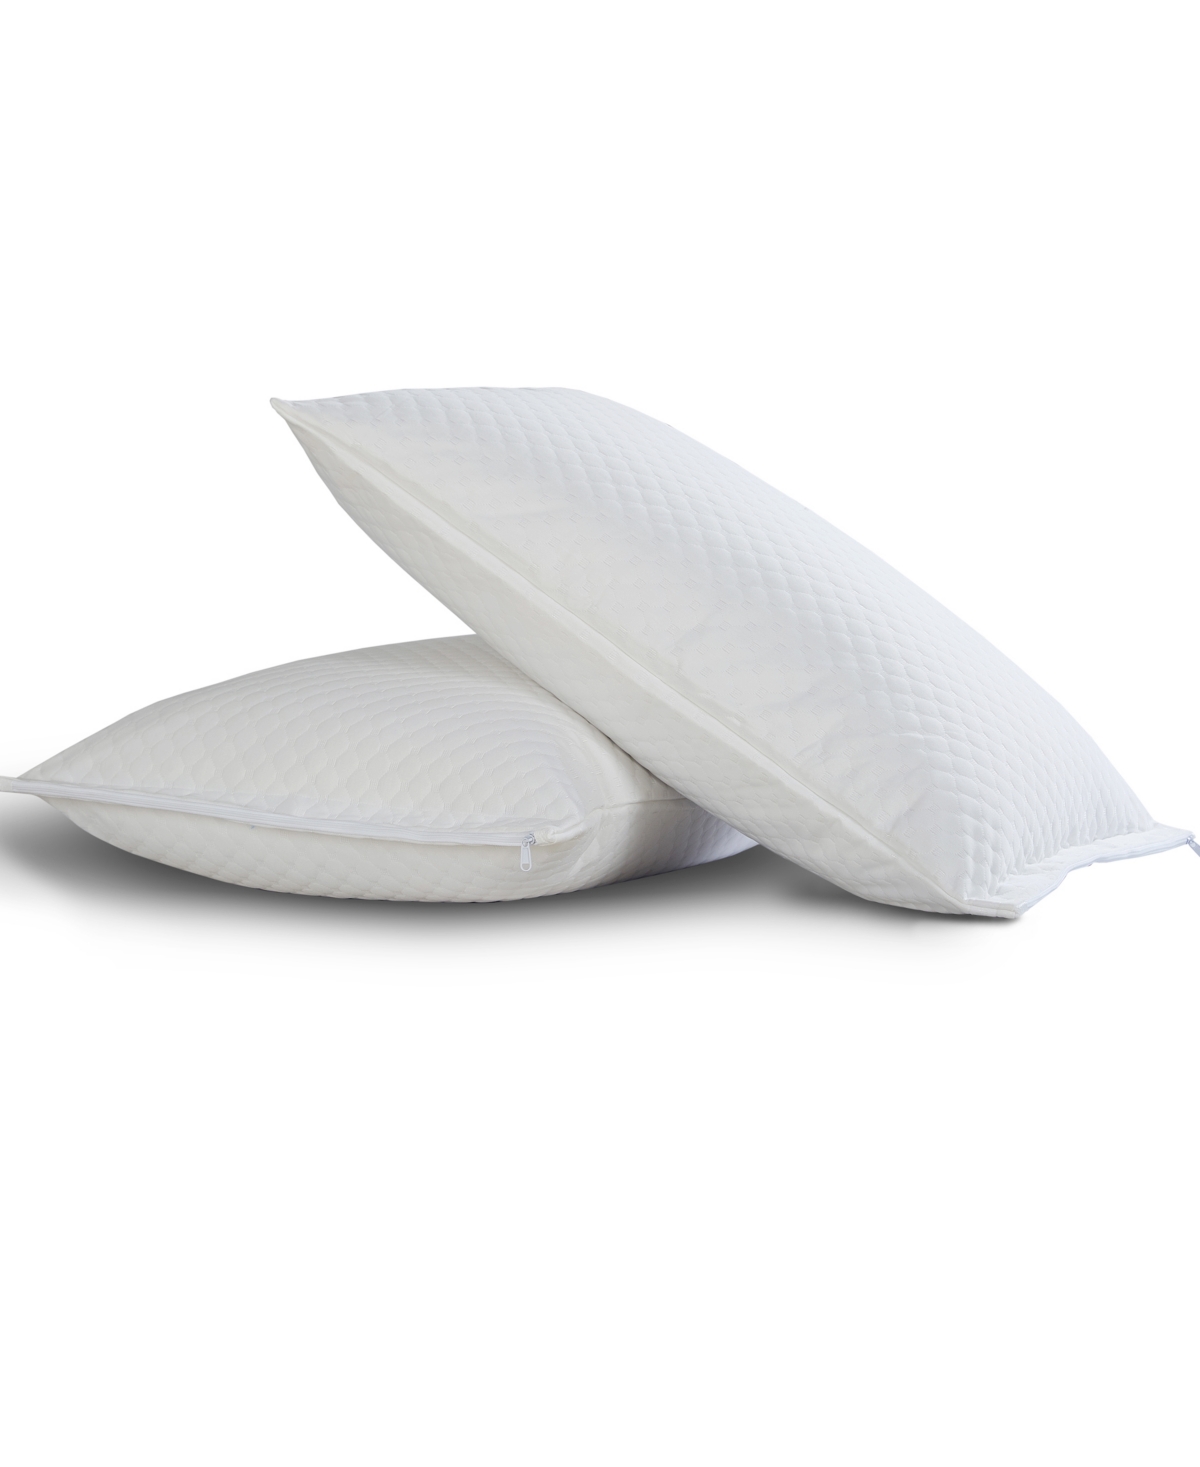 All-In-One Comfort Top Queen Pillow Protectors with Bed Bug Blocker 2-Pack